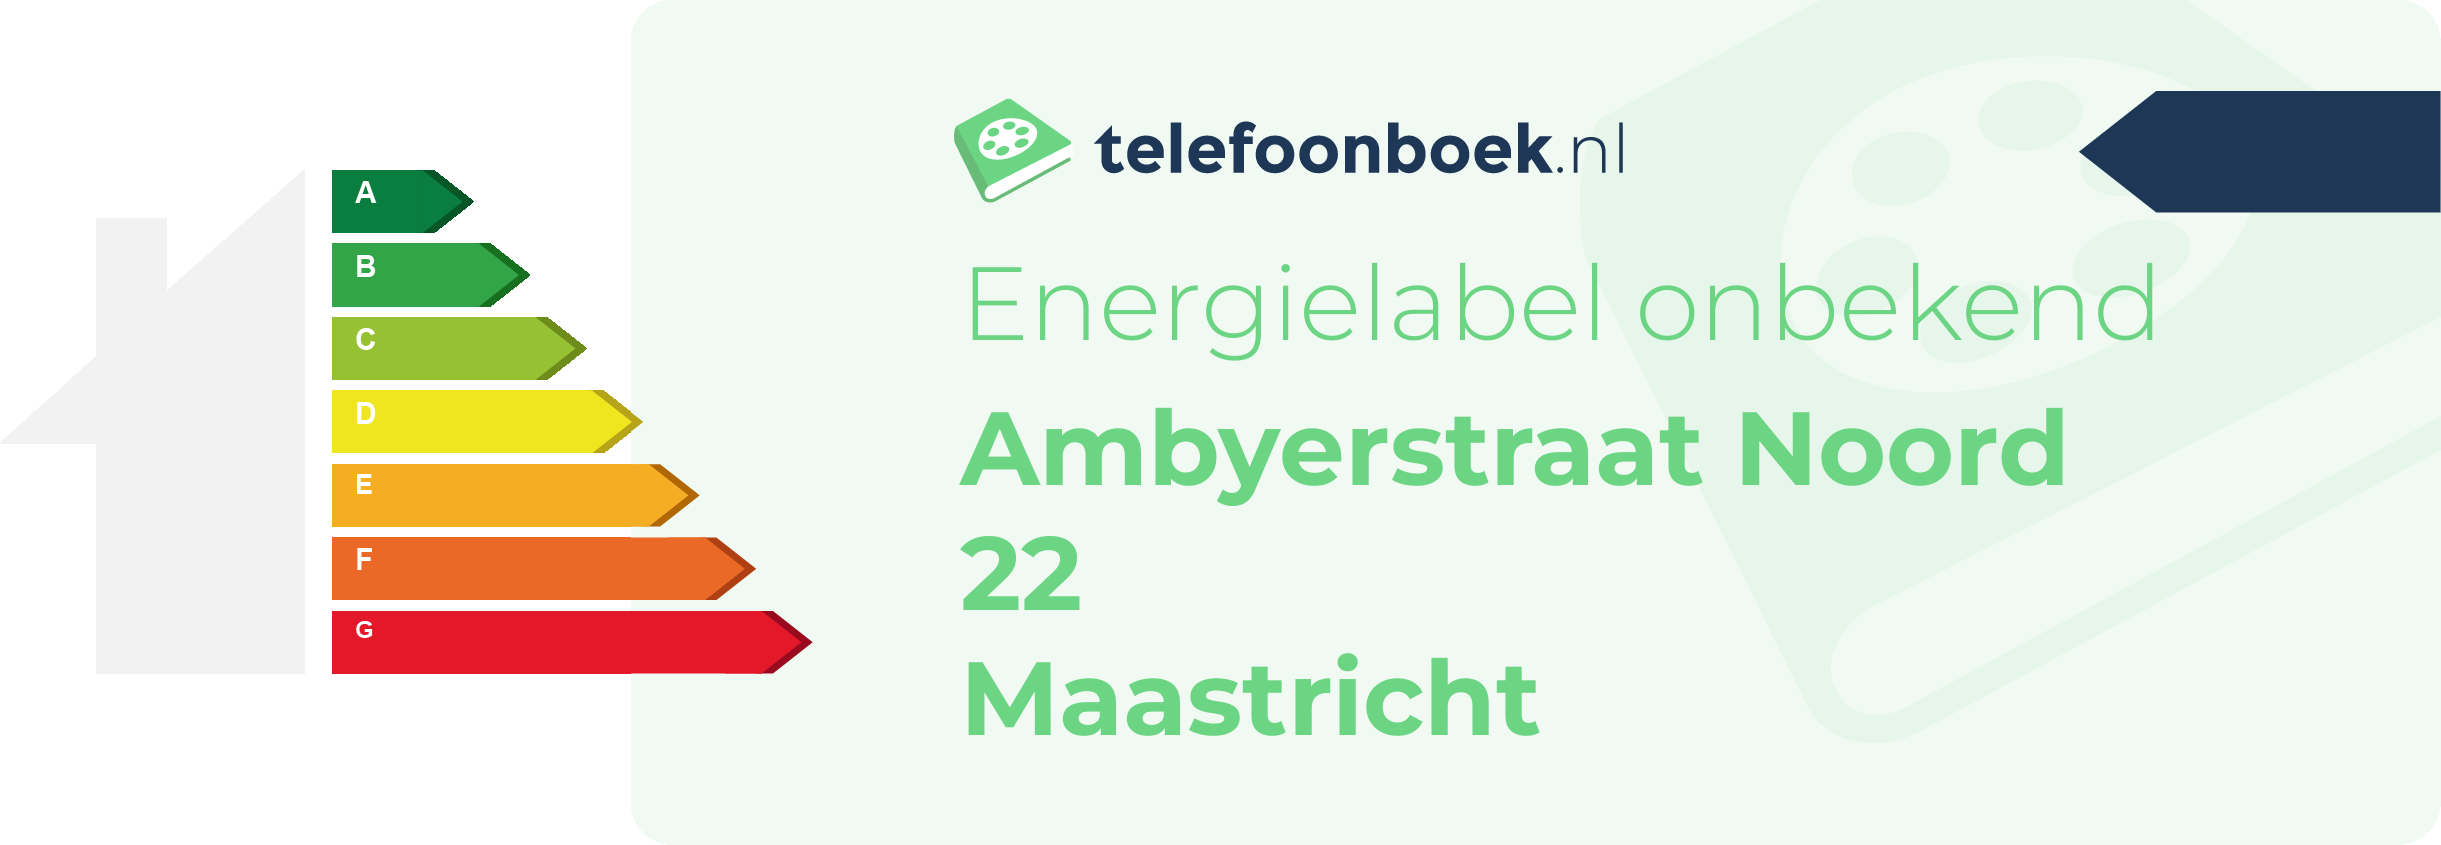 Energielabel Ambyerstraat Noord 22 Maastricht